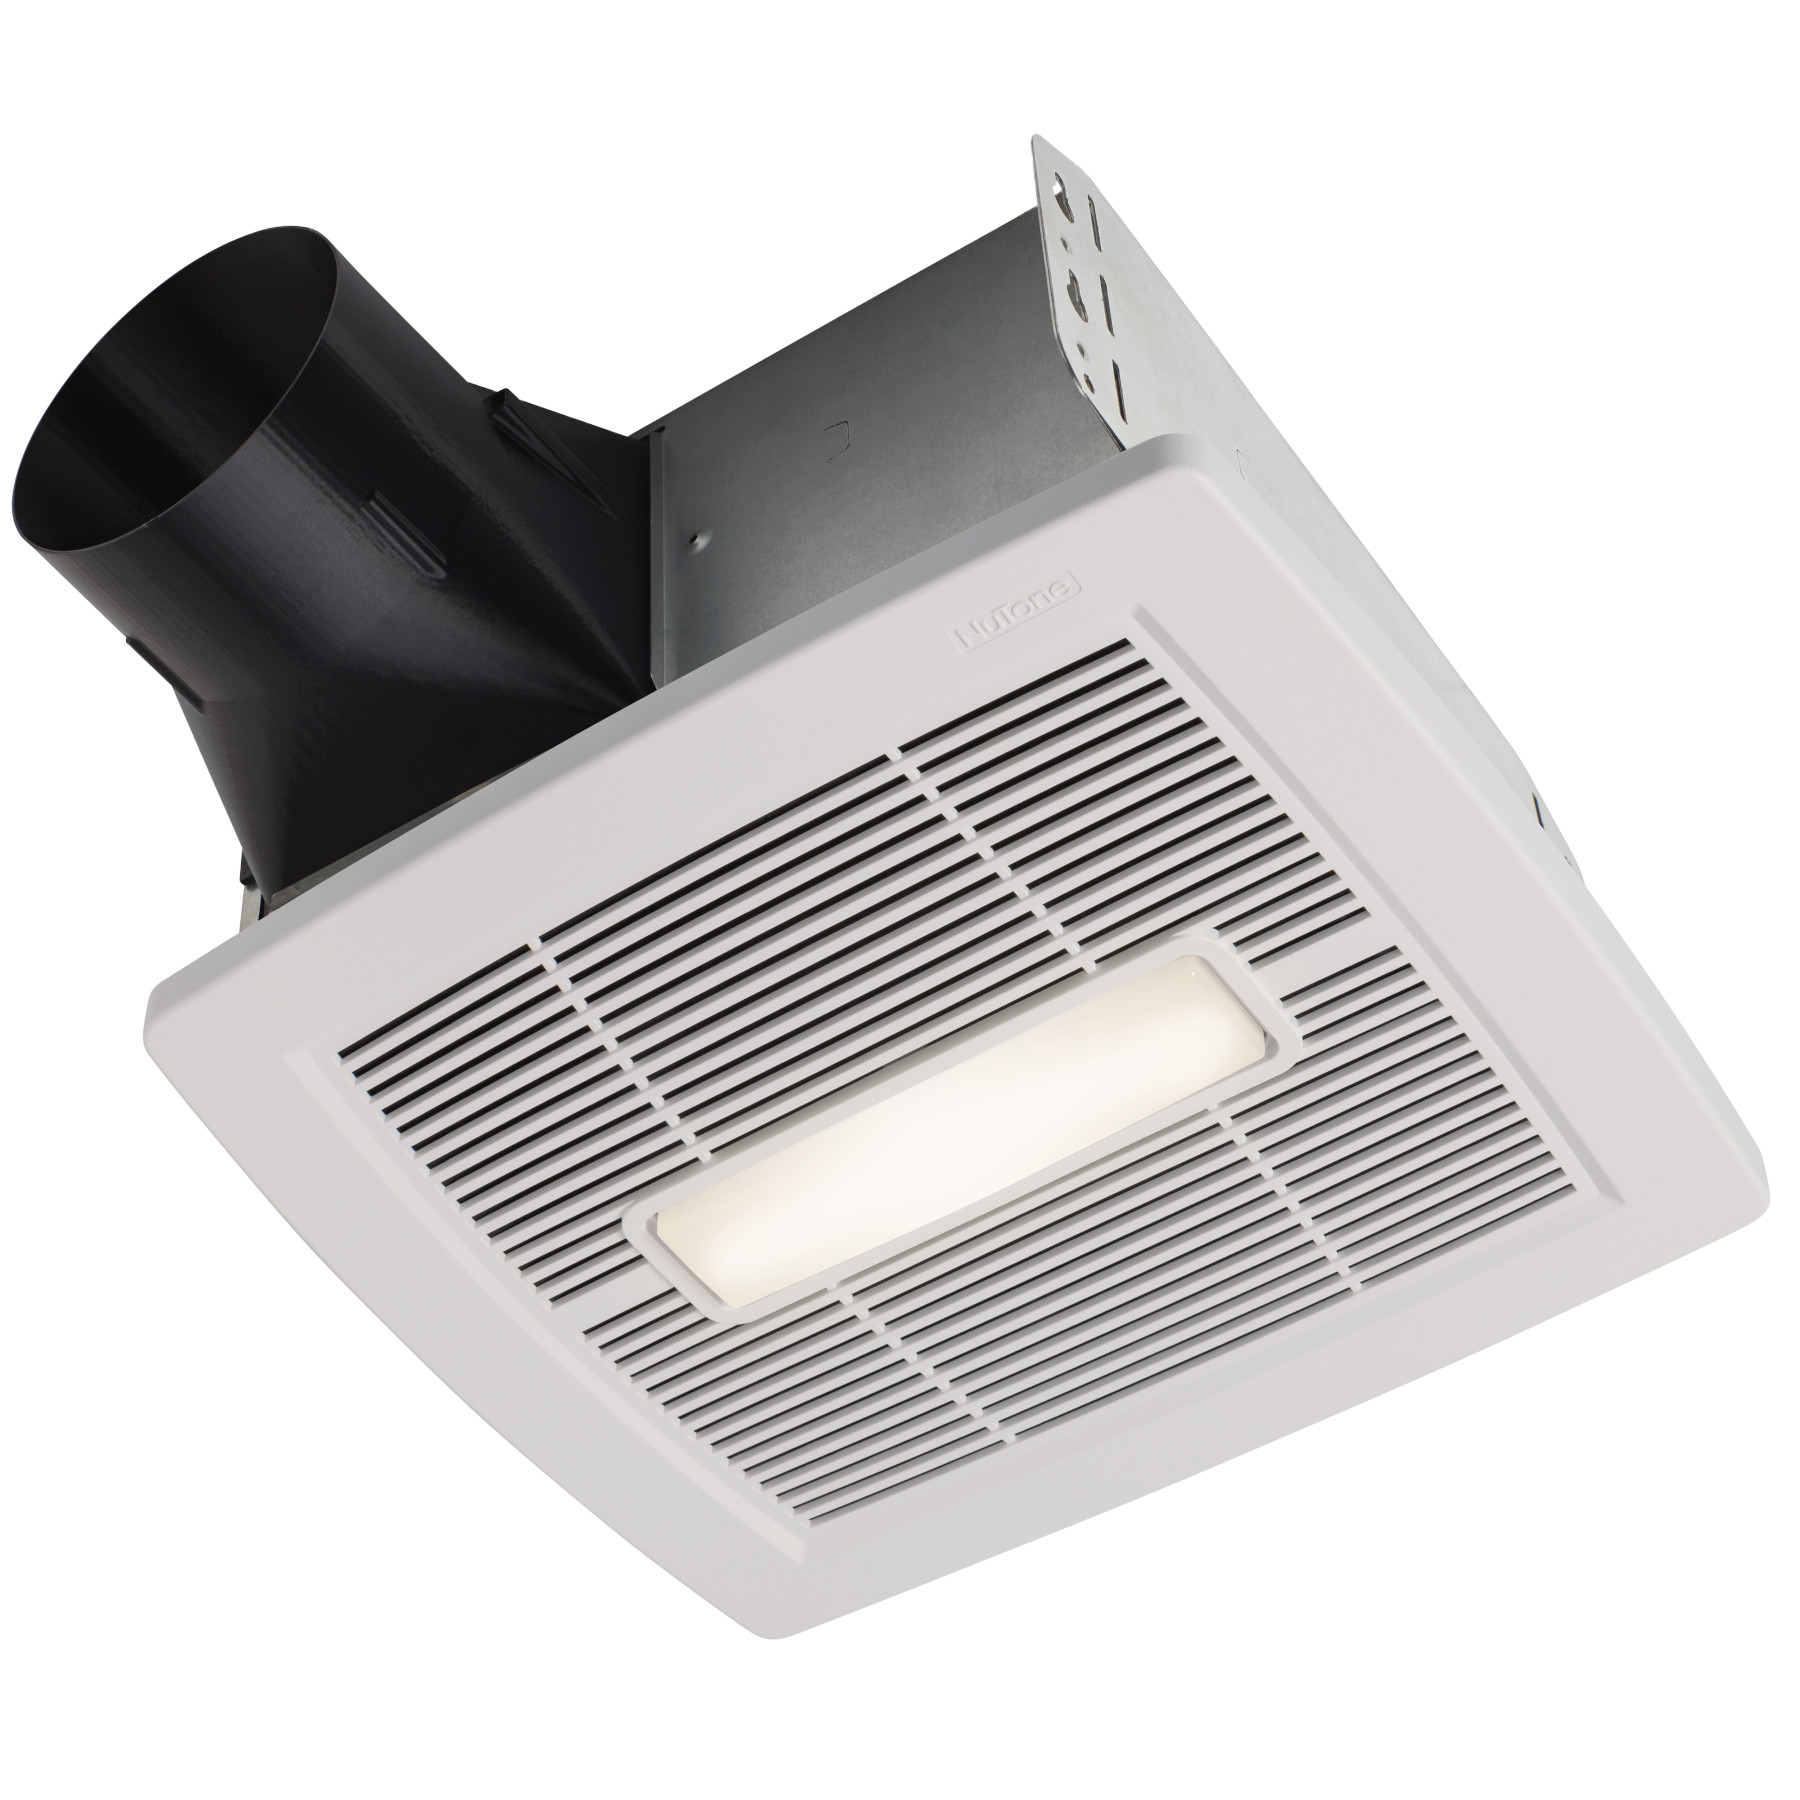 Broan-NuTone Roomside Series 110 CFM Ceiling Bathroom Exhaust Fan with 